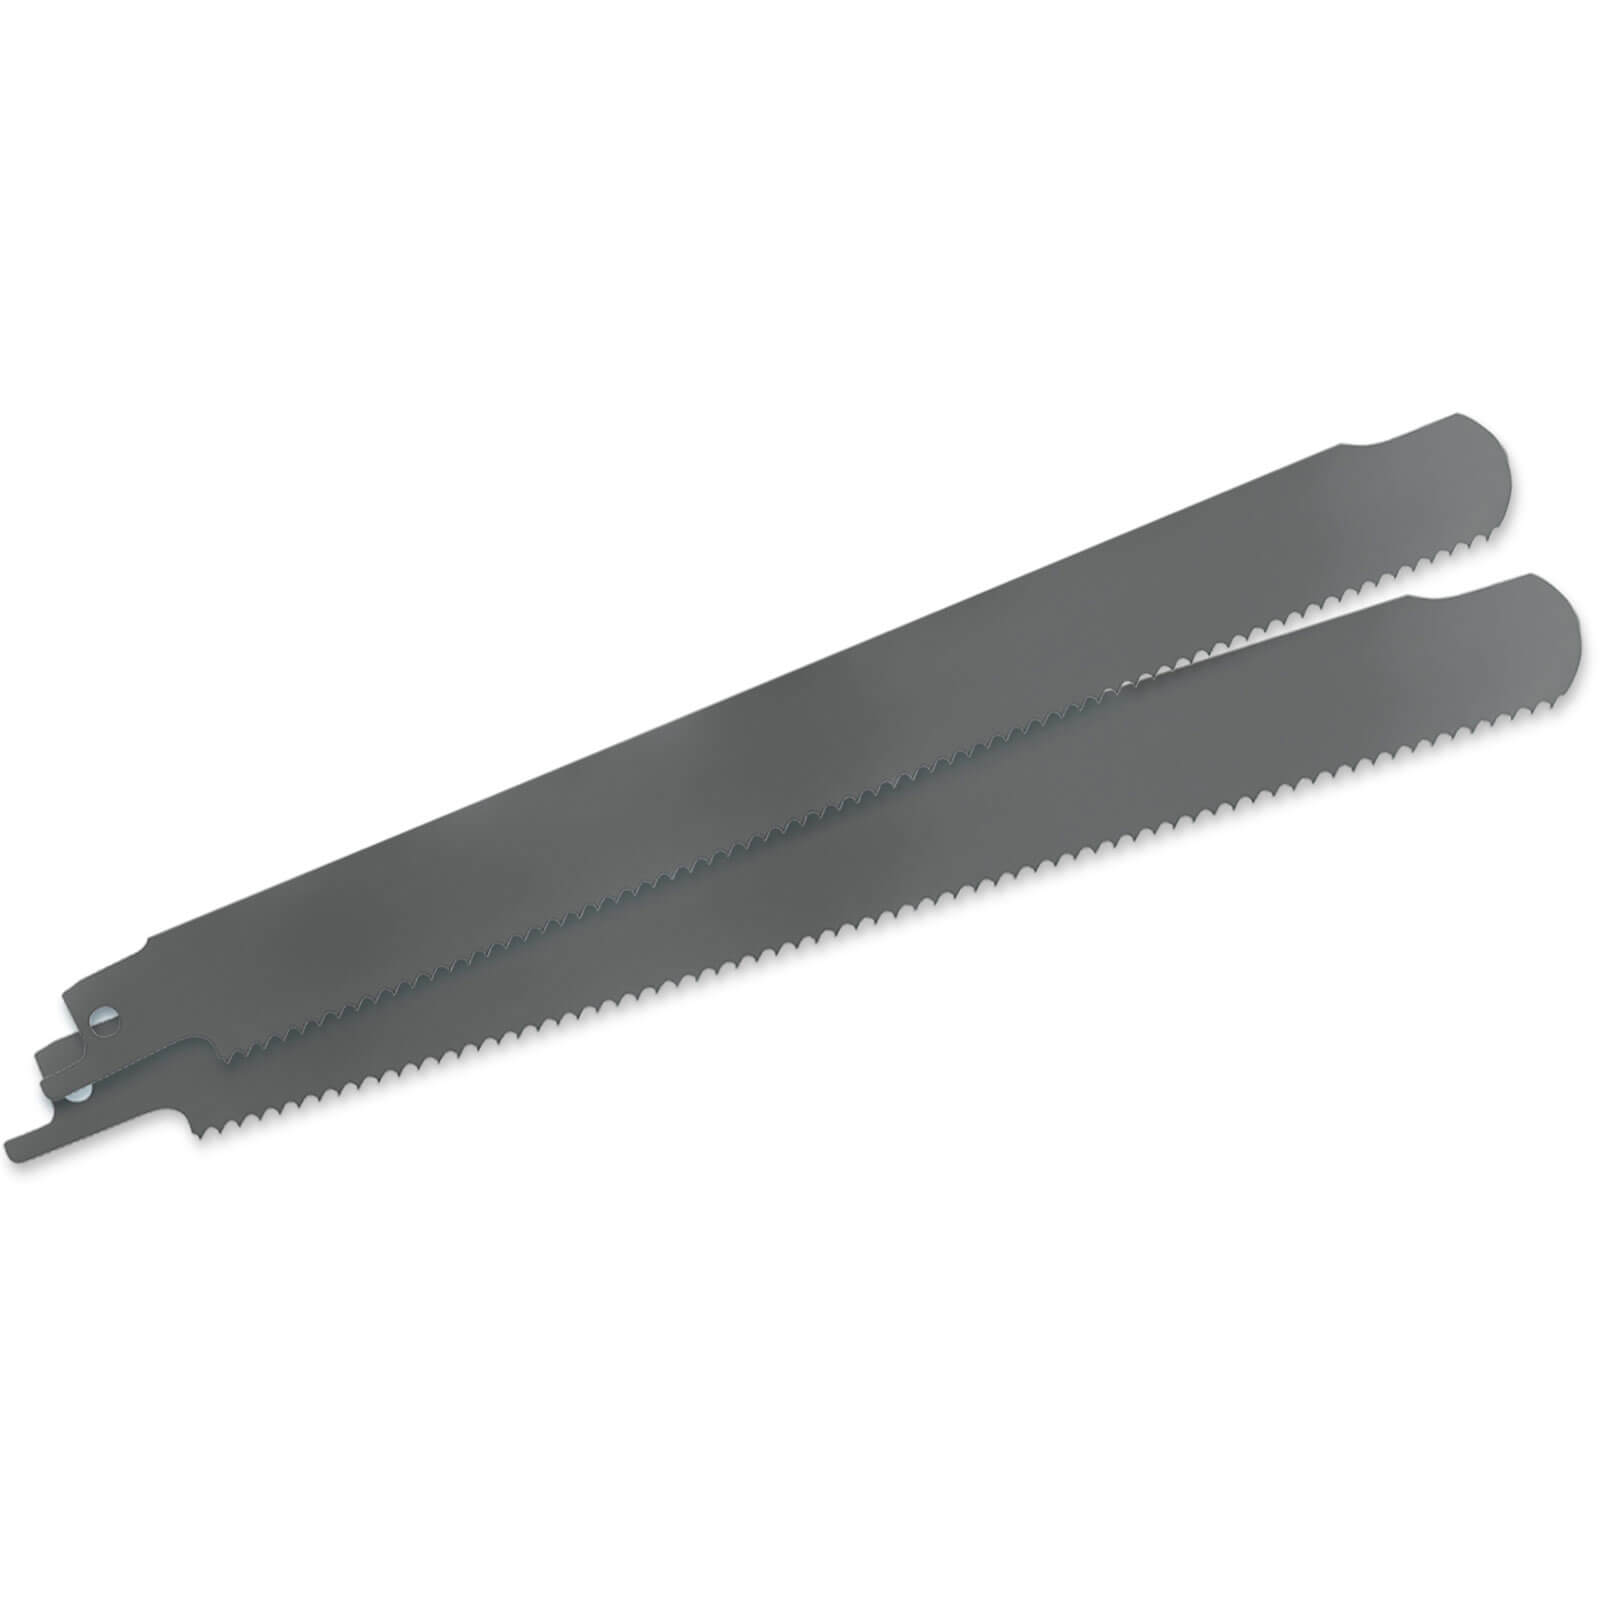 Image of Lenox Pallet Cutting Reciprocating Sabre Saw Blades Bulk Packs 227mm Pack of 250